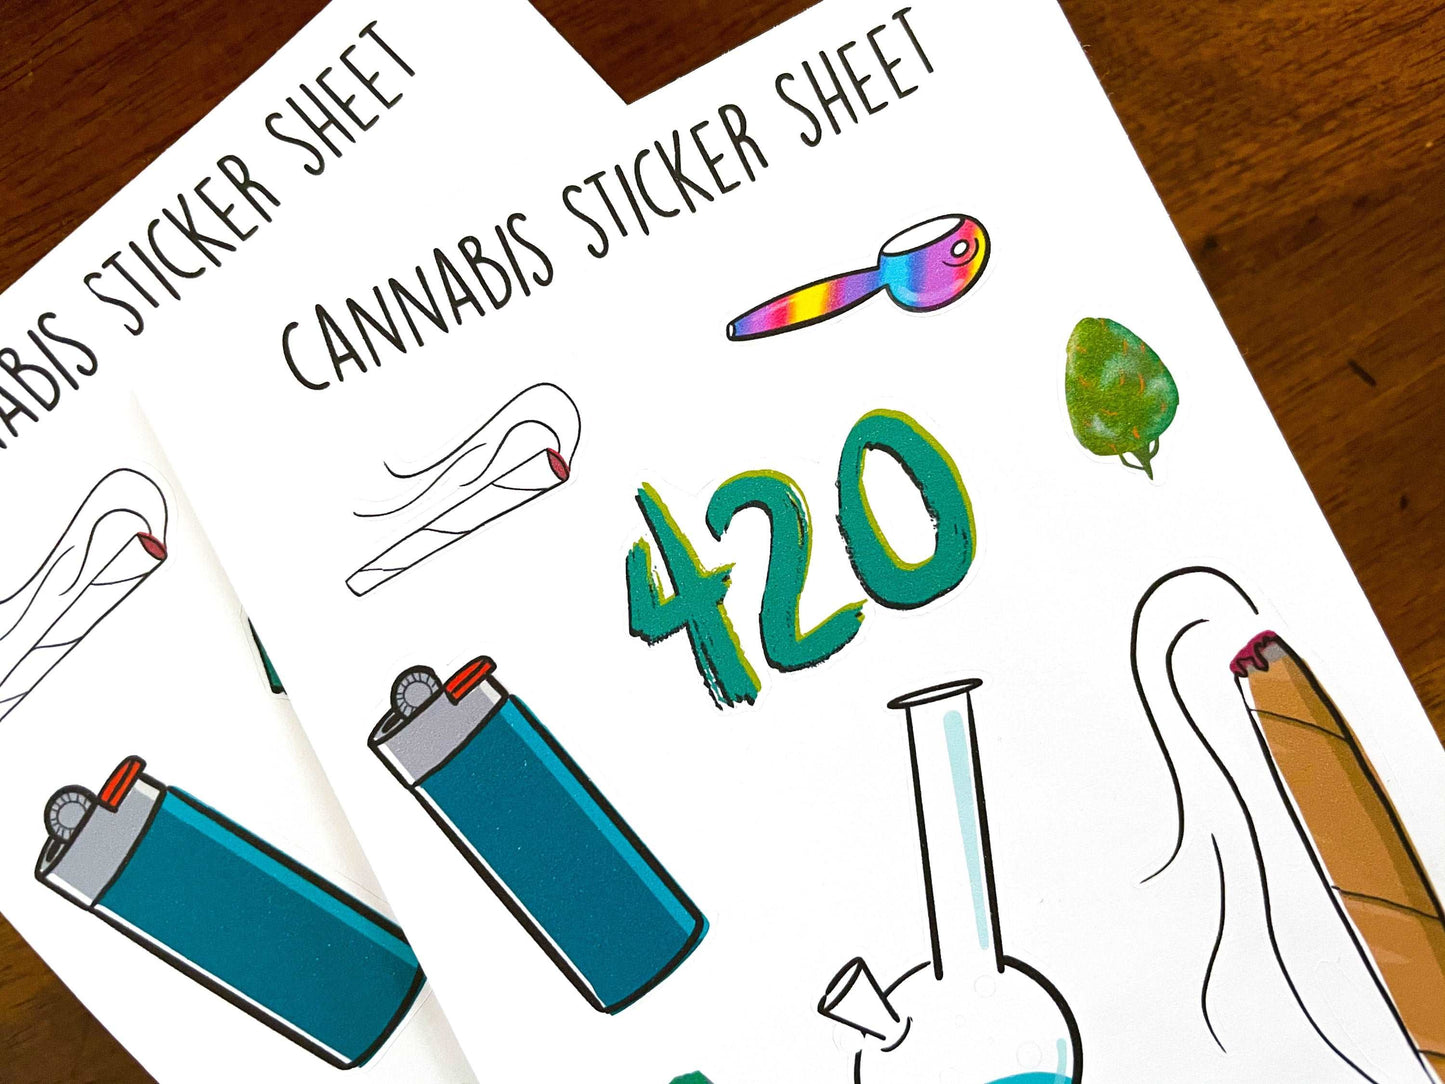 Cannabis Marijuana Journal Planner Sticker Sheet by StoneDonut Design